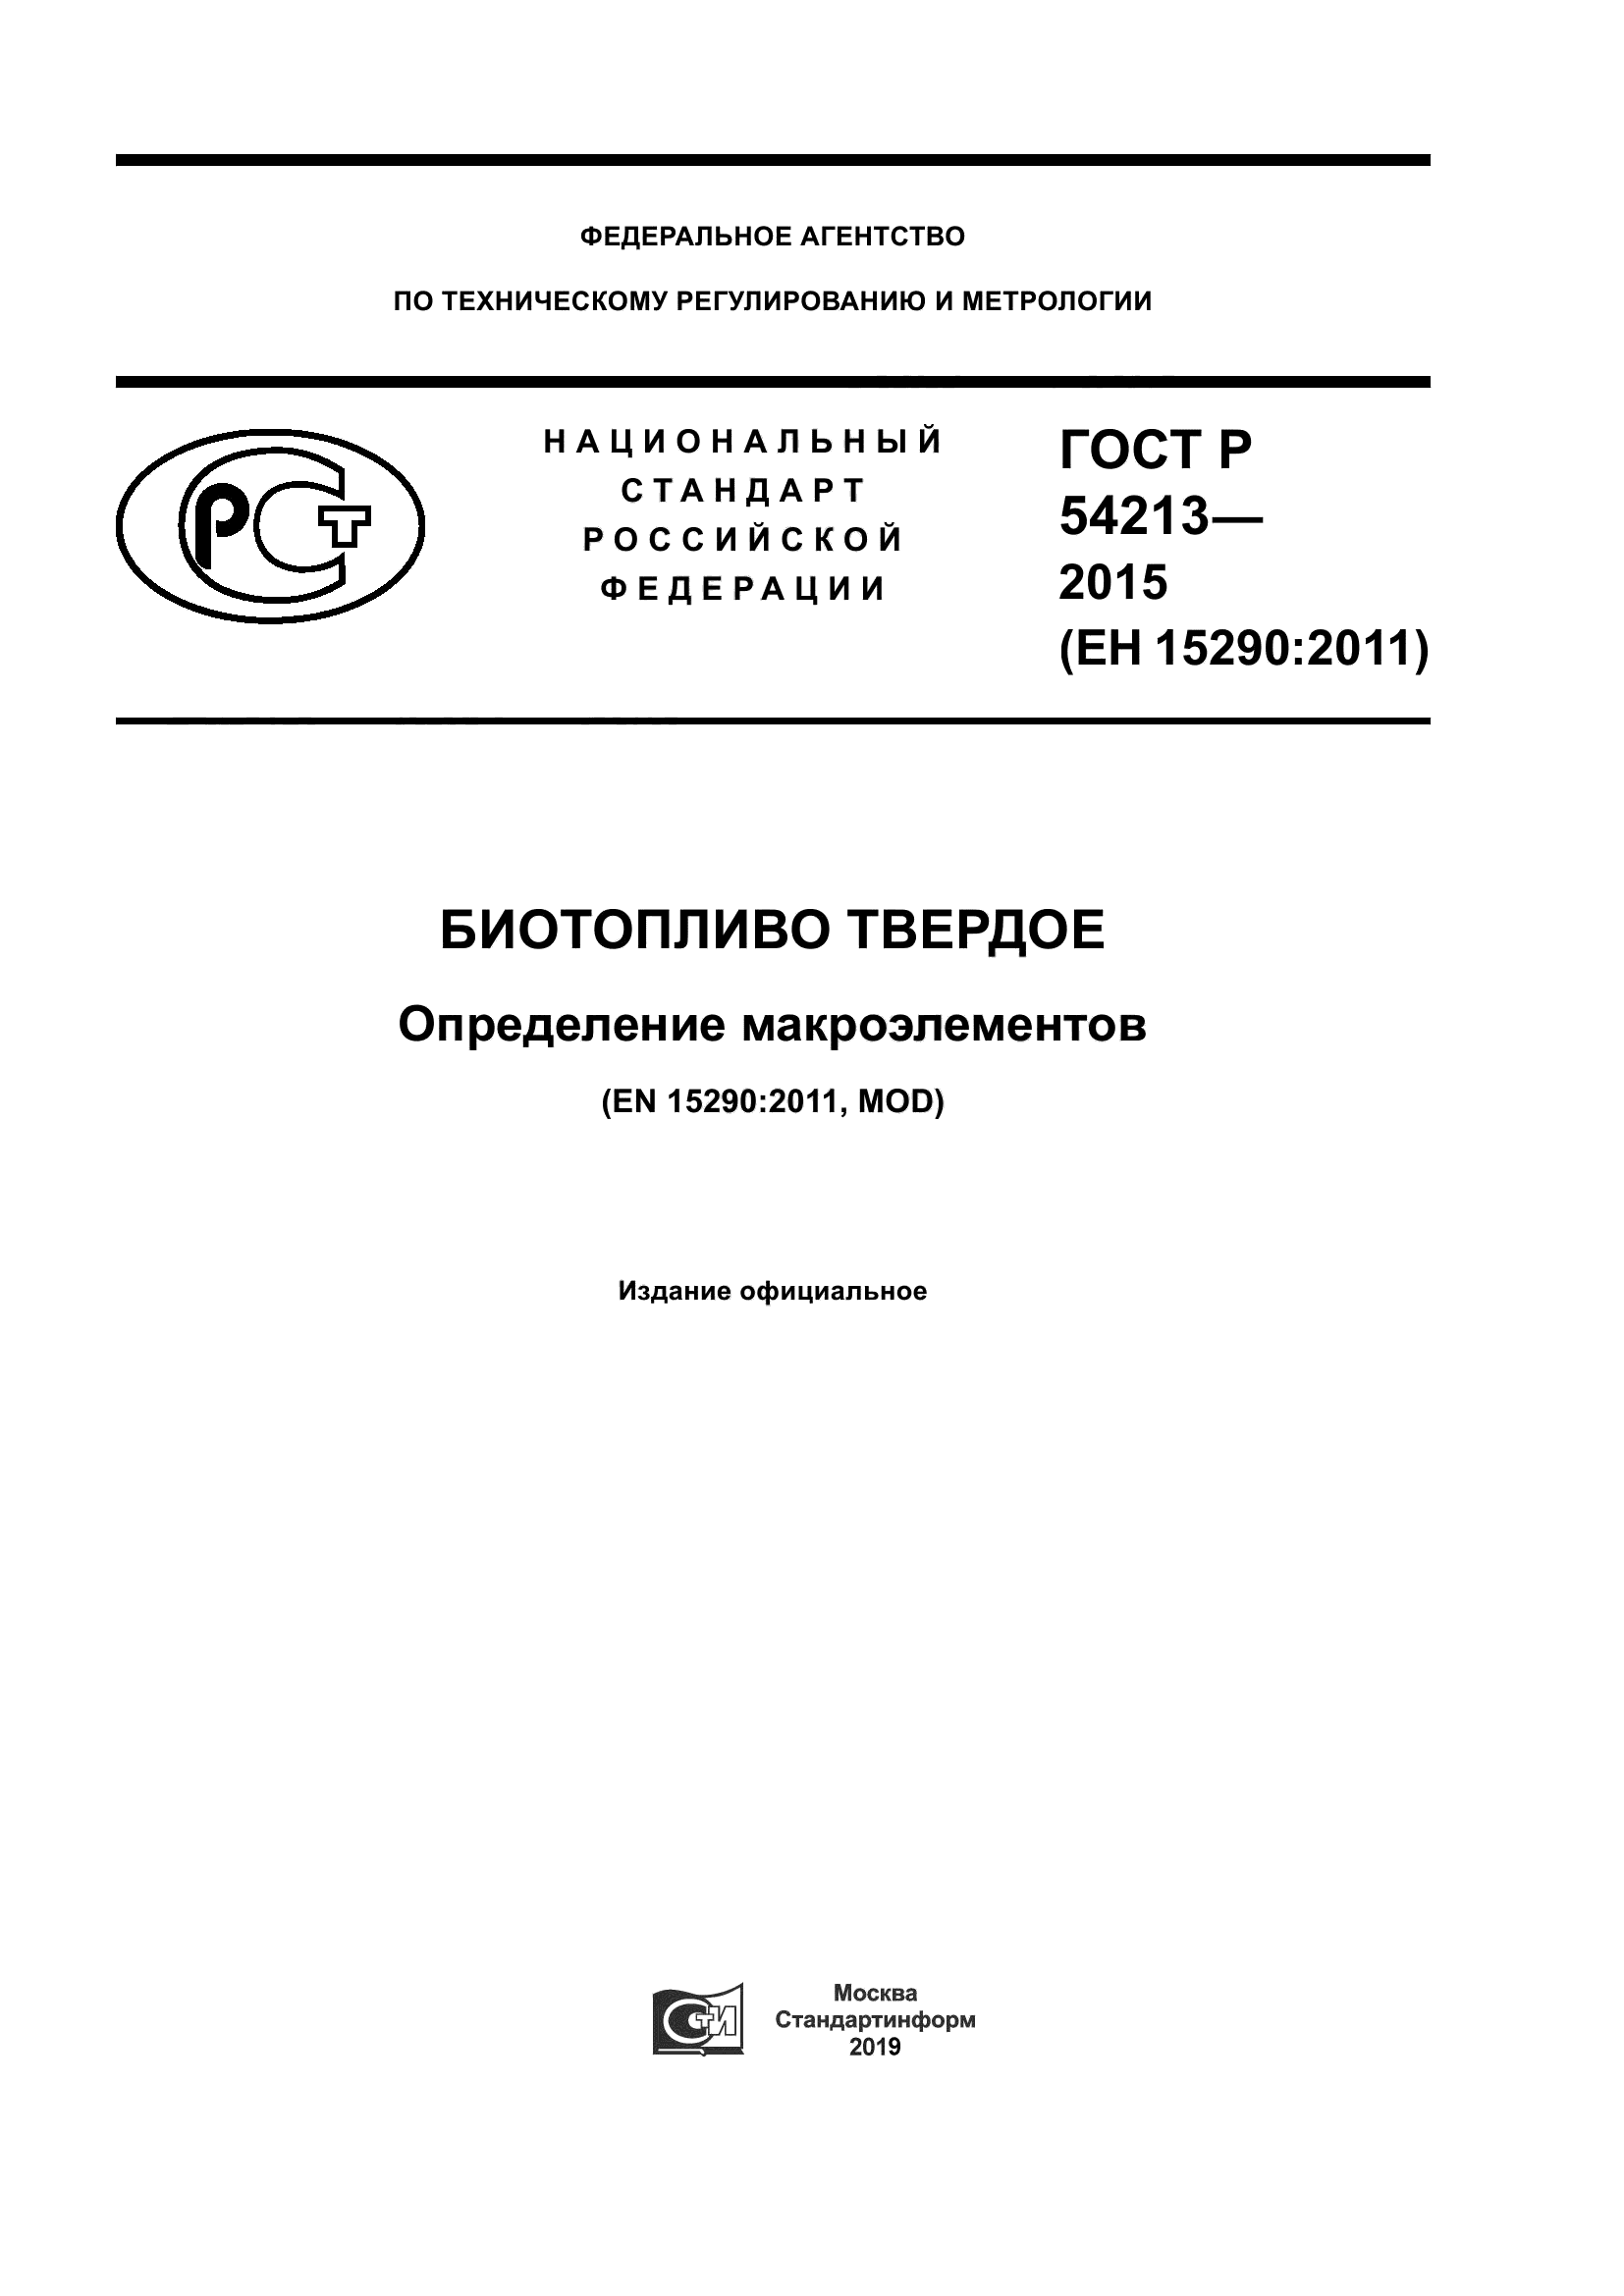 ГОСТ Р 54213-2015